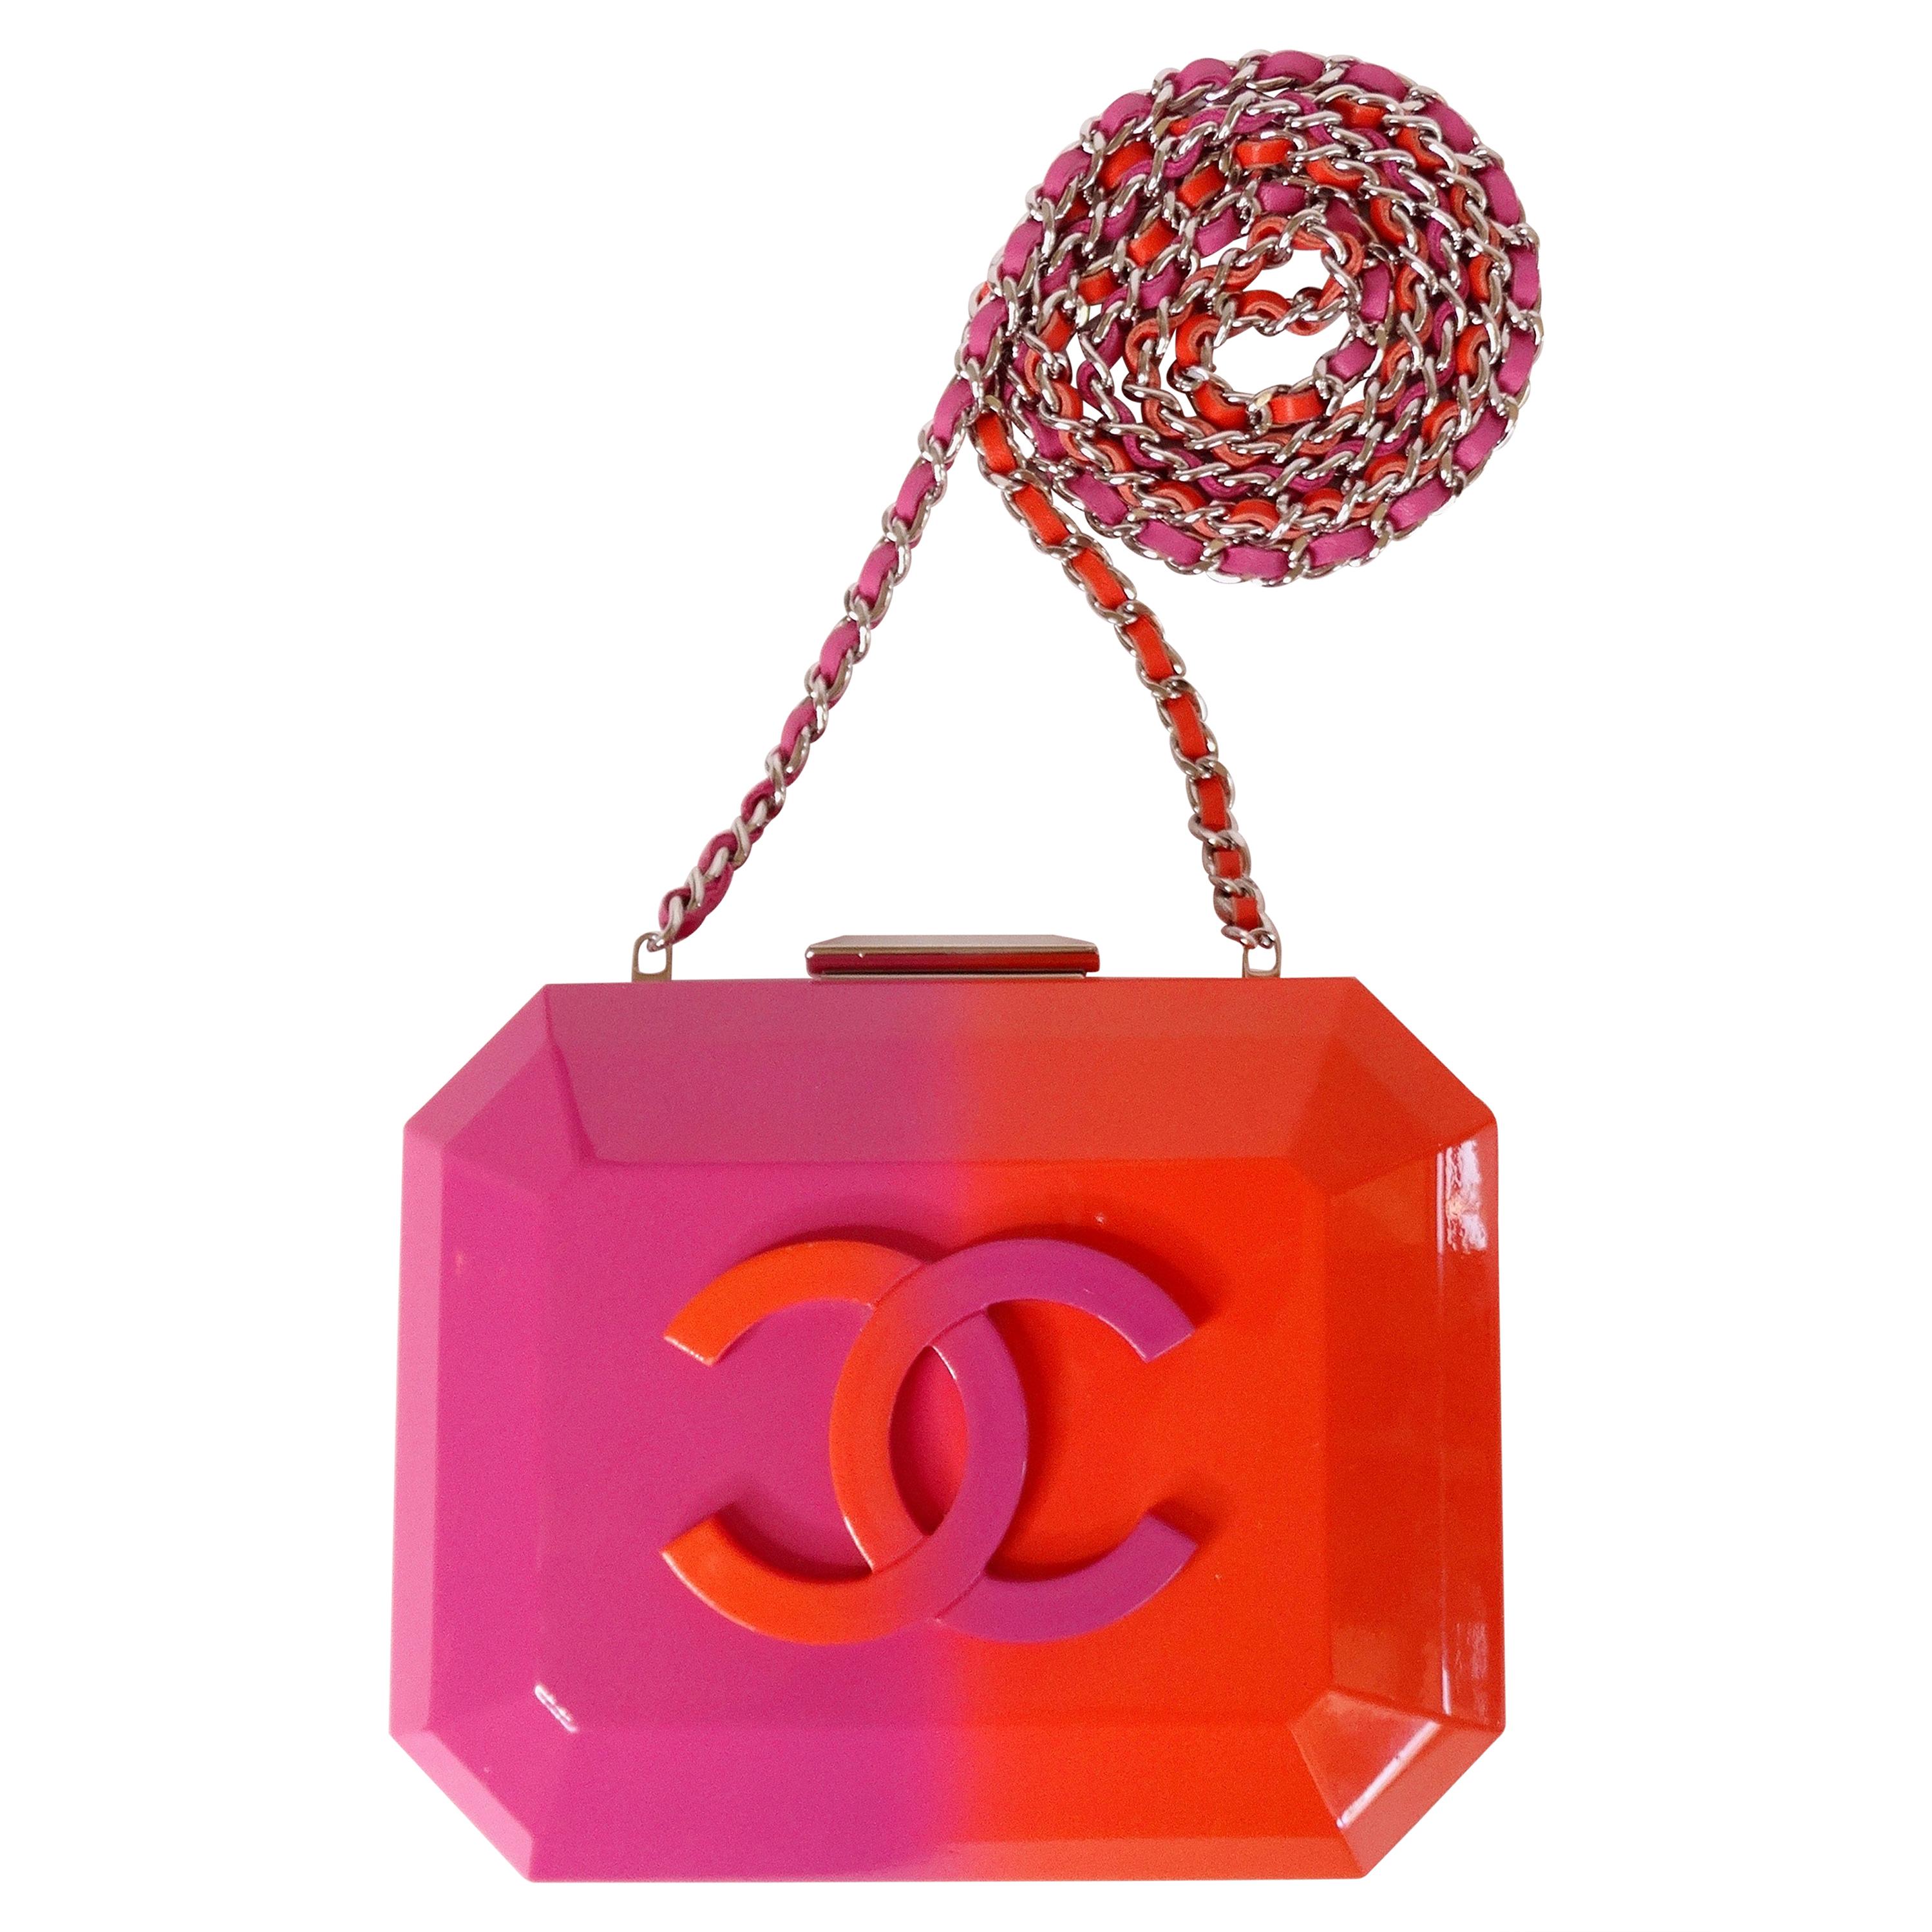 Chanel Runway Minaudière Ombre Pink & Orange Hard Shell Handbag